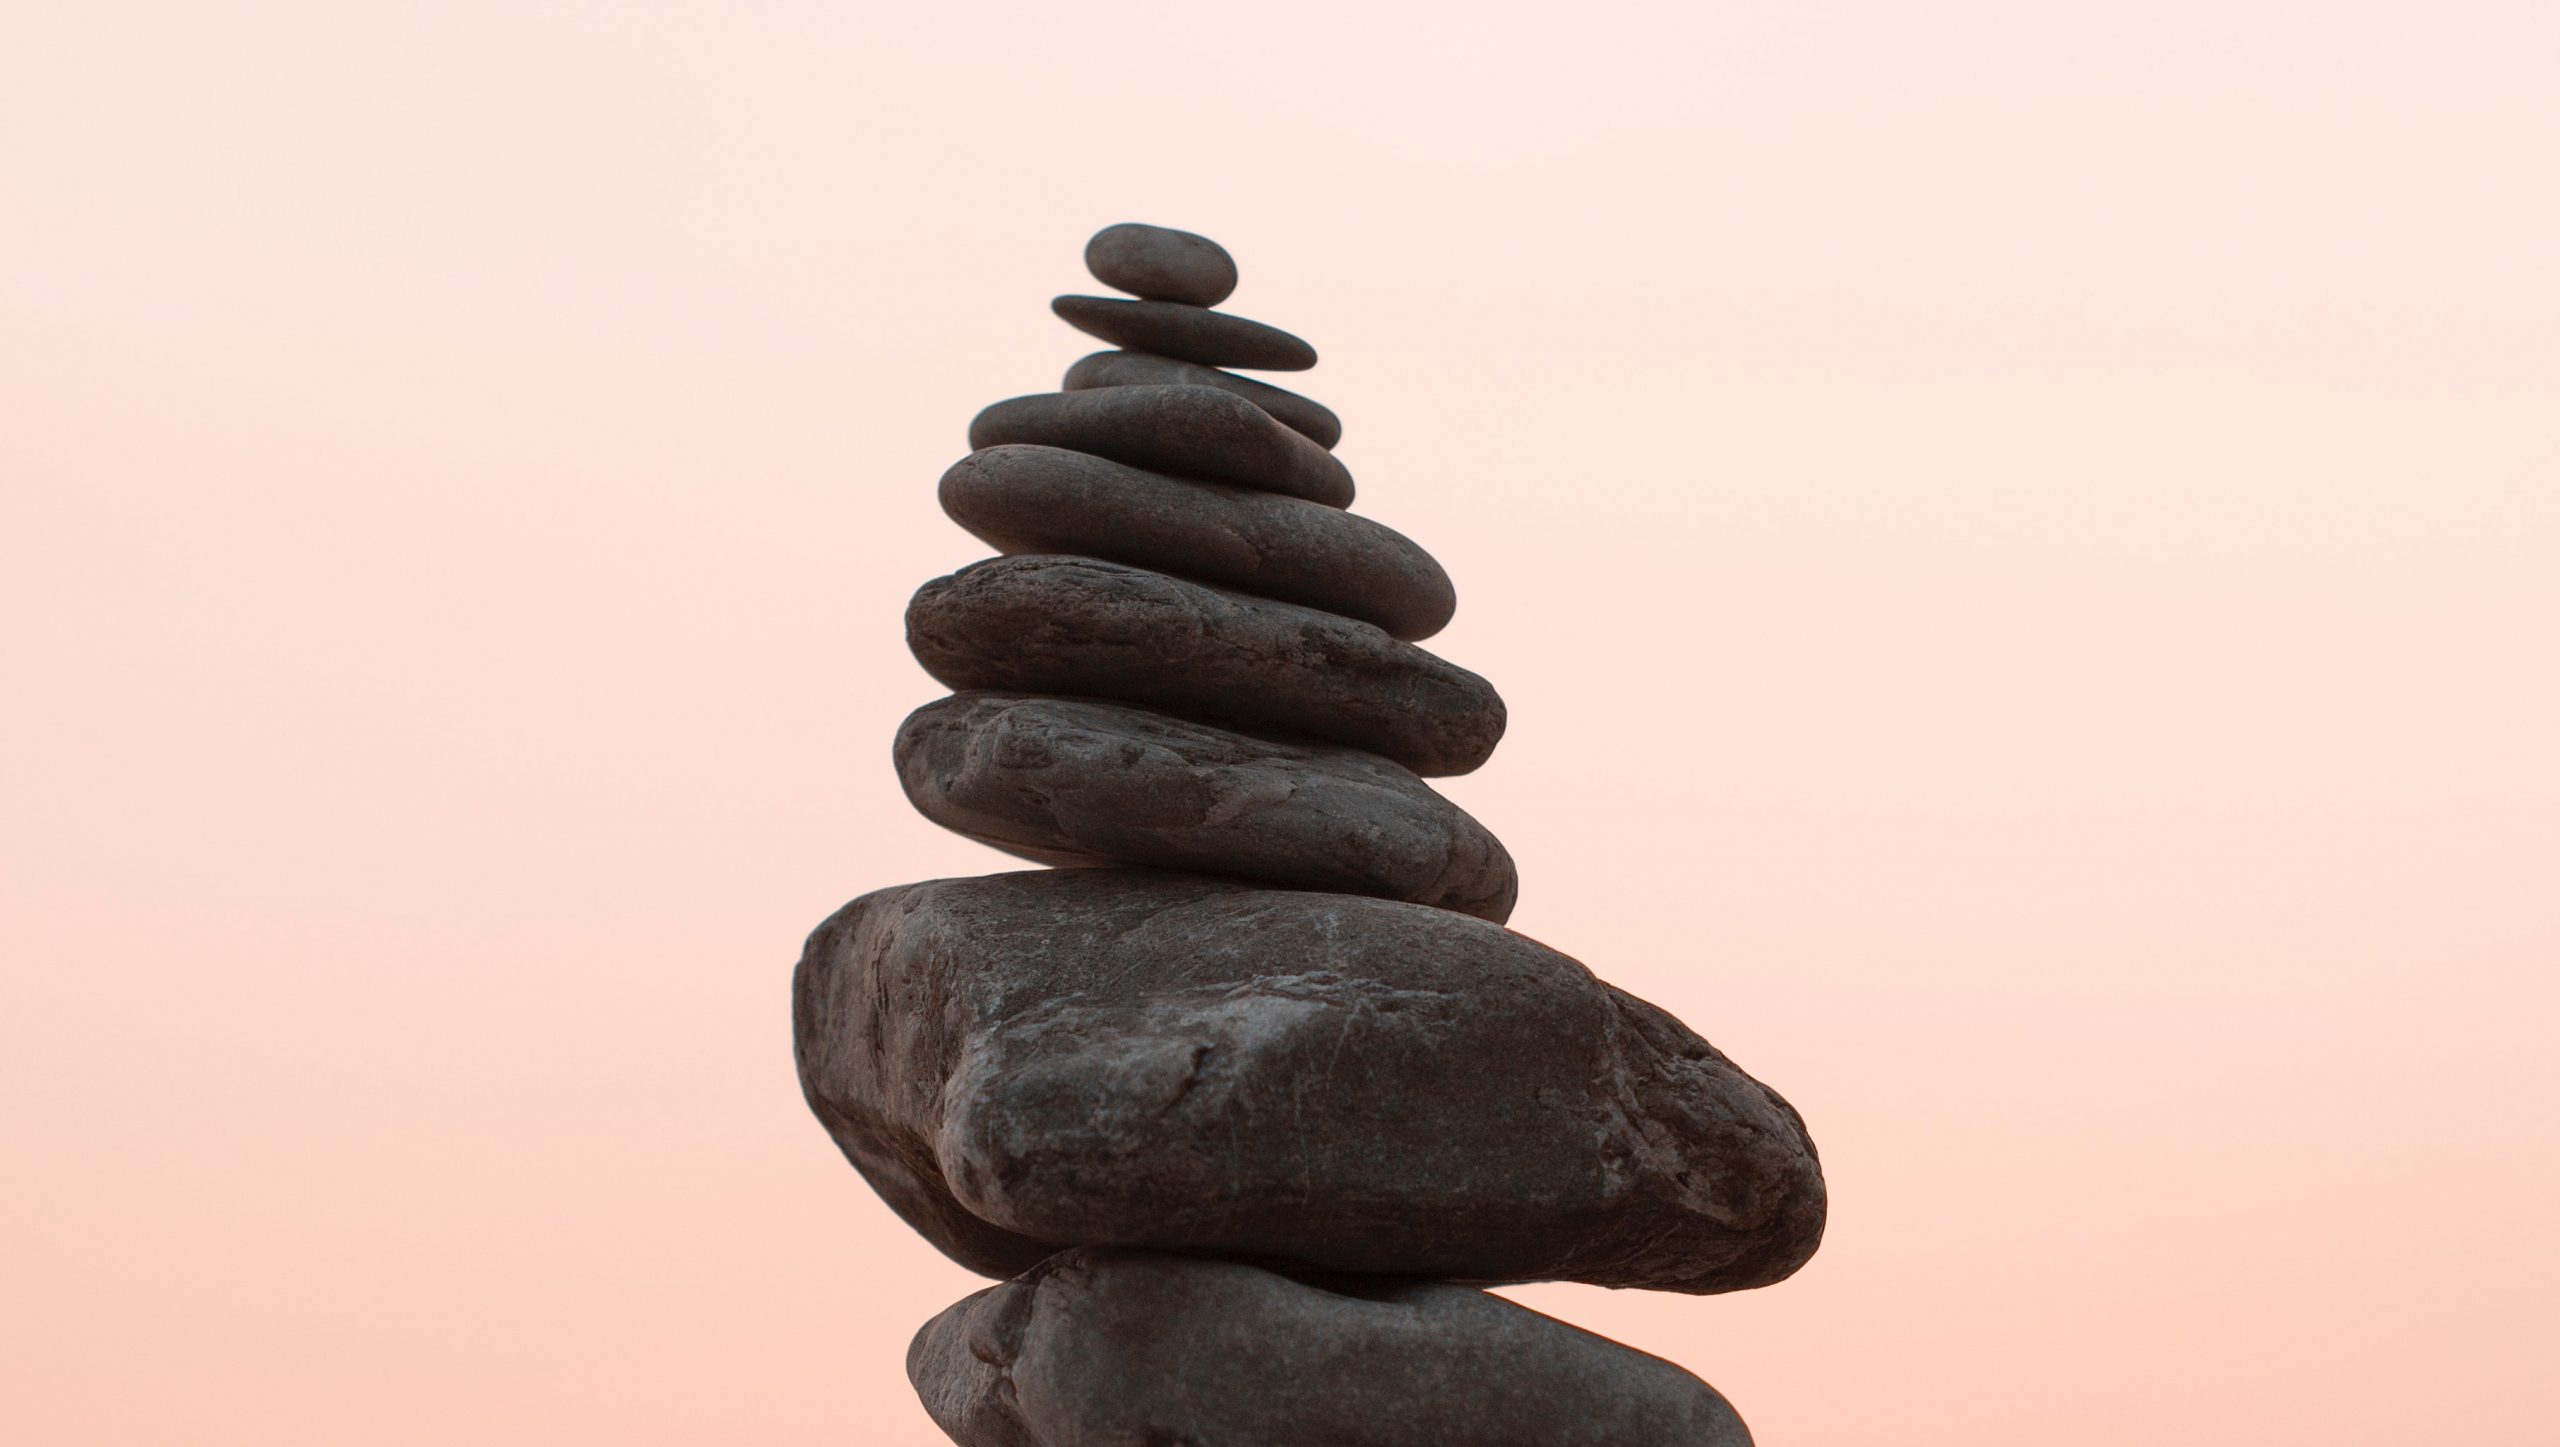 Stones balancing